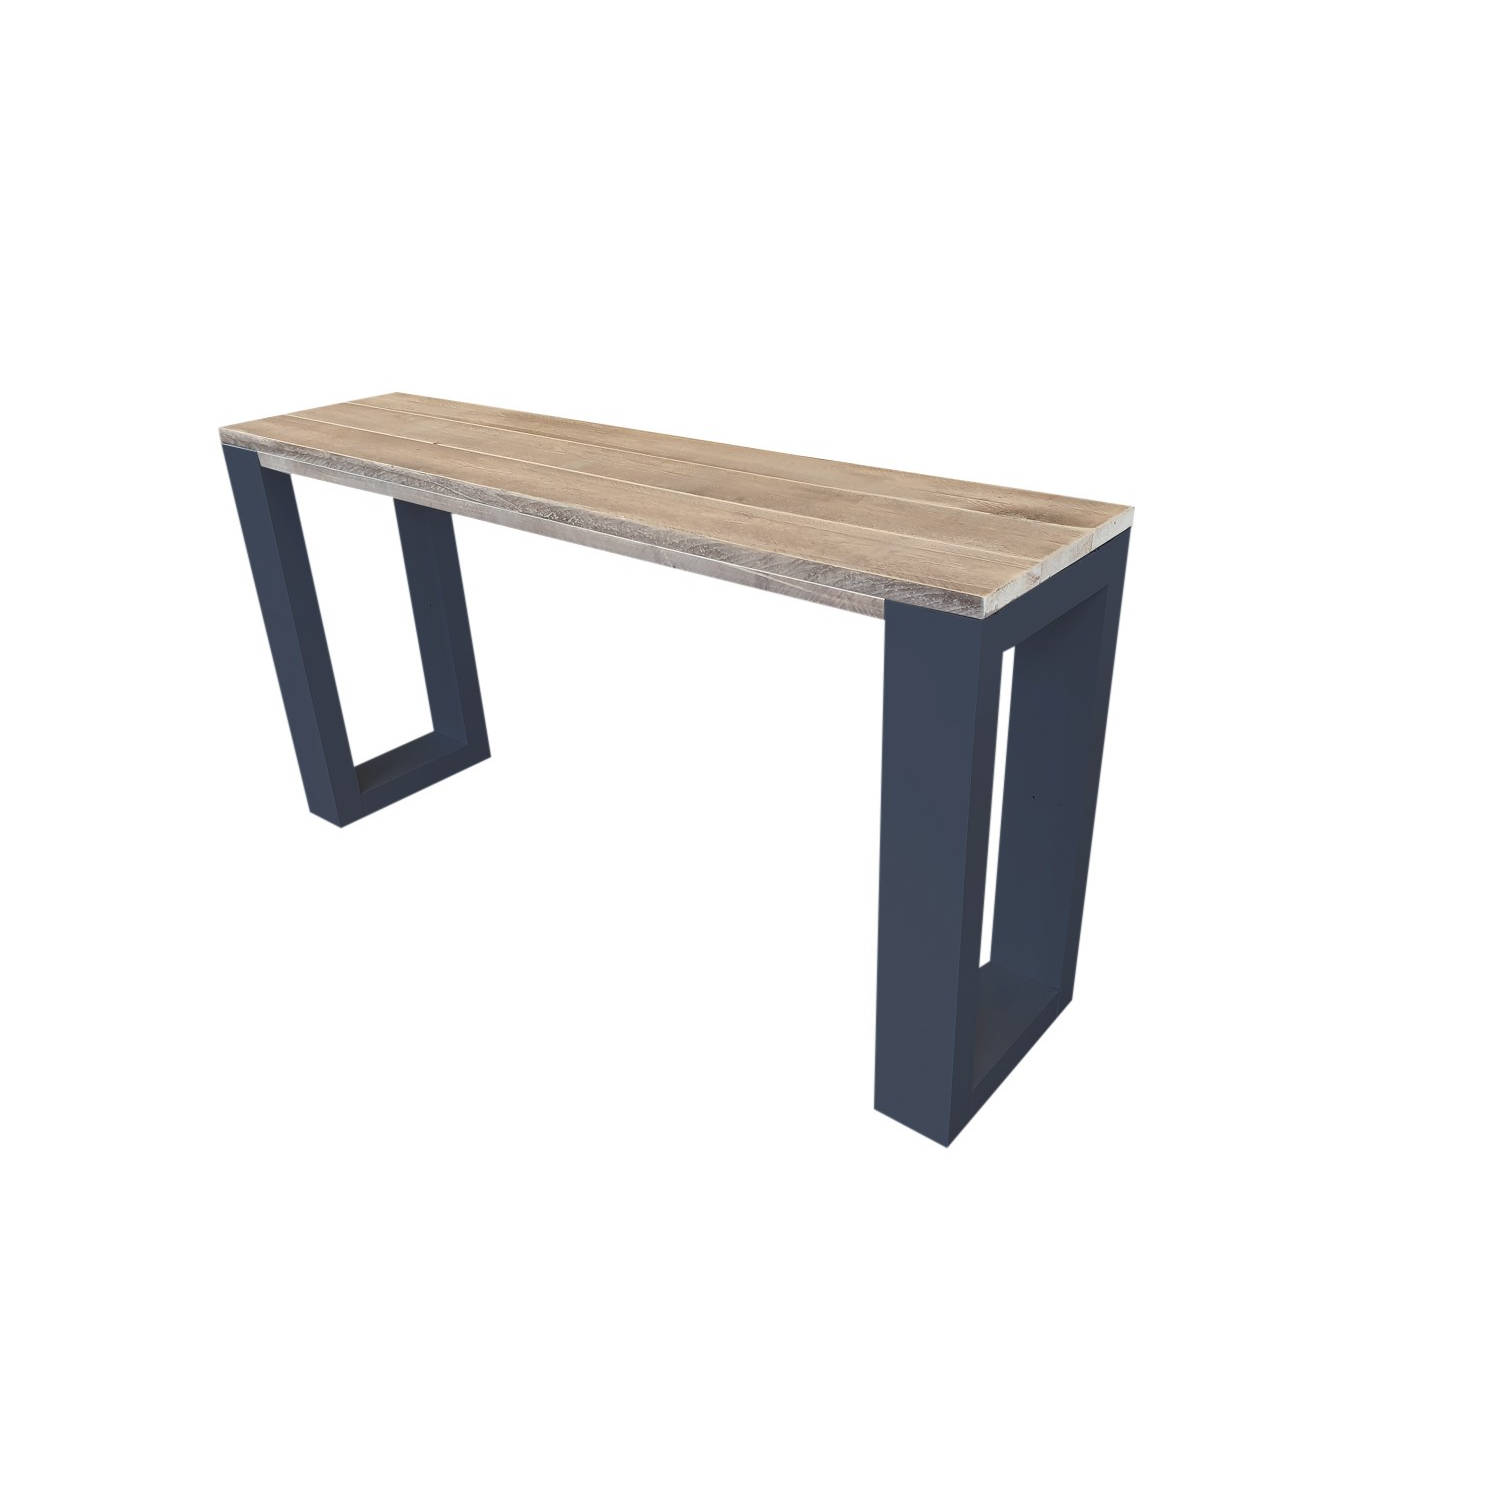 Wood4you Side table enkel steigerhout - Antraciet Eettafels 150 cm Bijzettafel